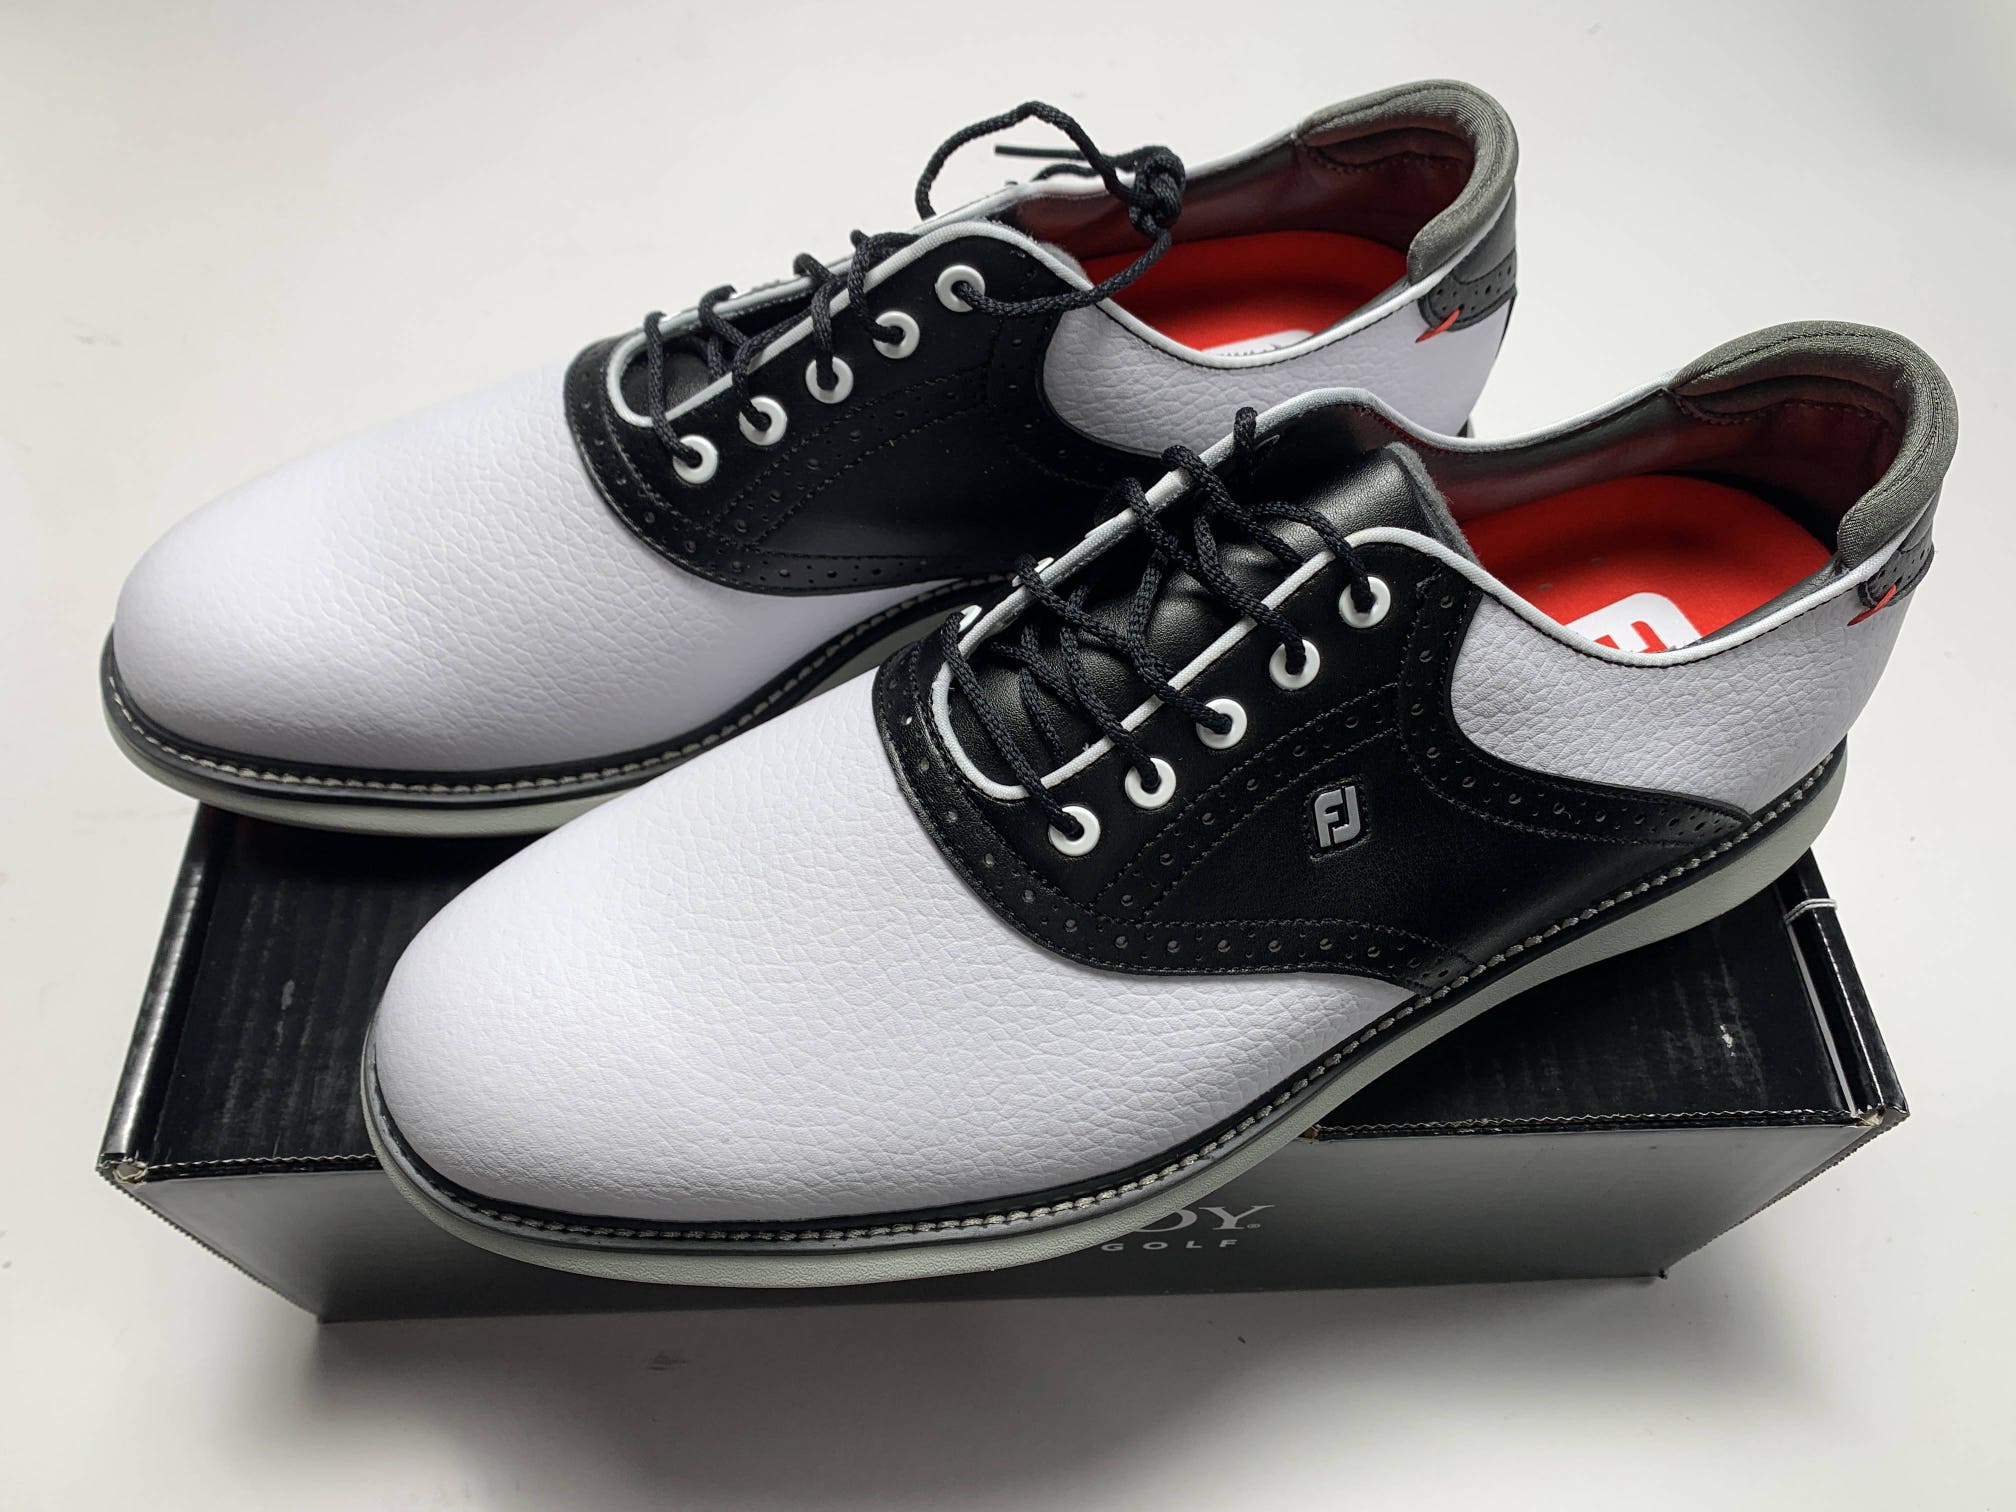 FootJoy FJ Traditions Golf Shoes White Black Men's SZ 13 (57924)